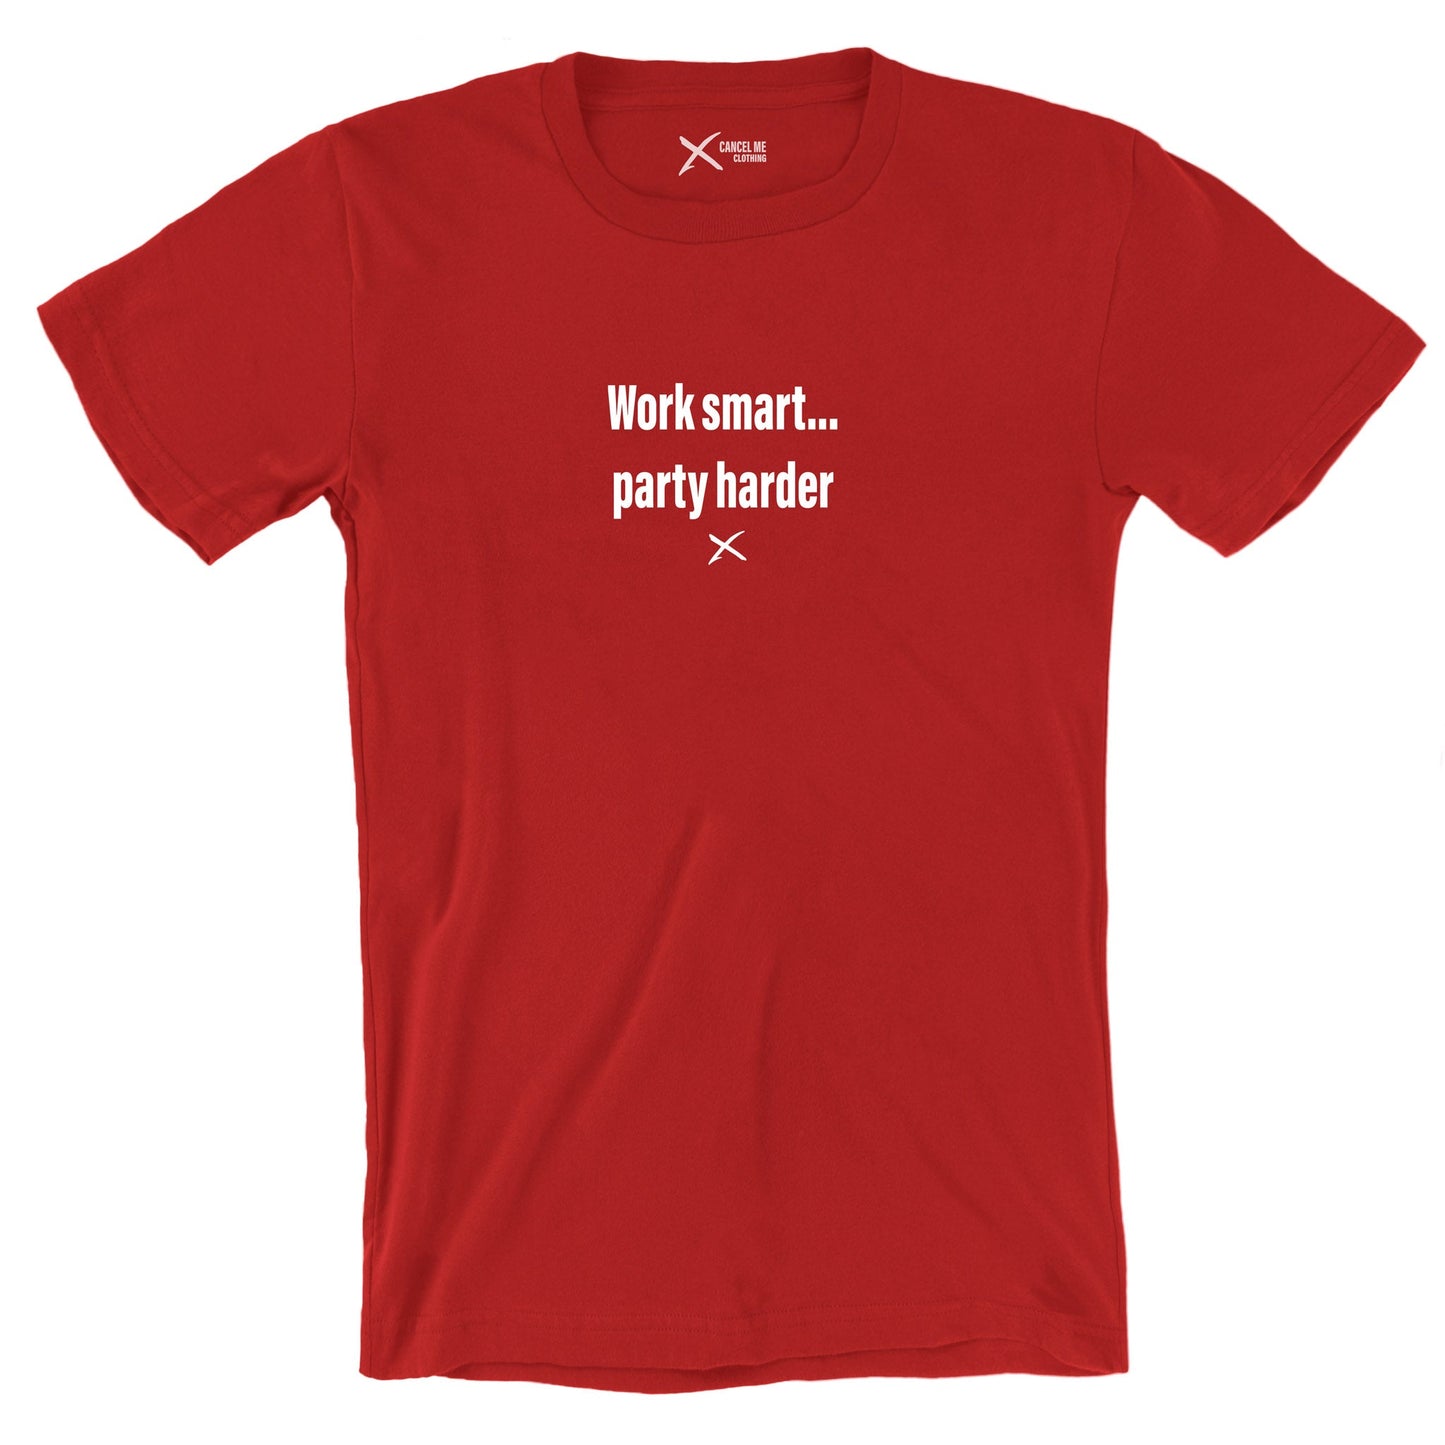 Work smart... party harder - Shirt